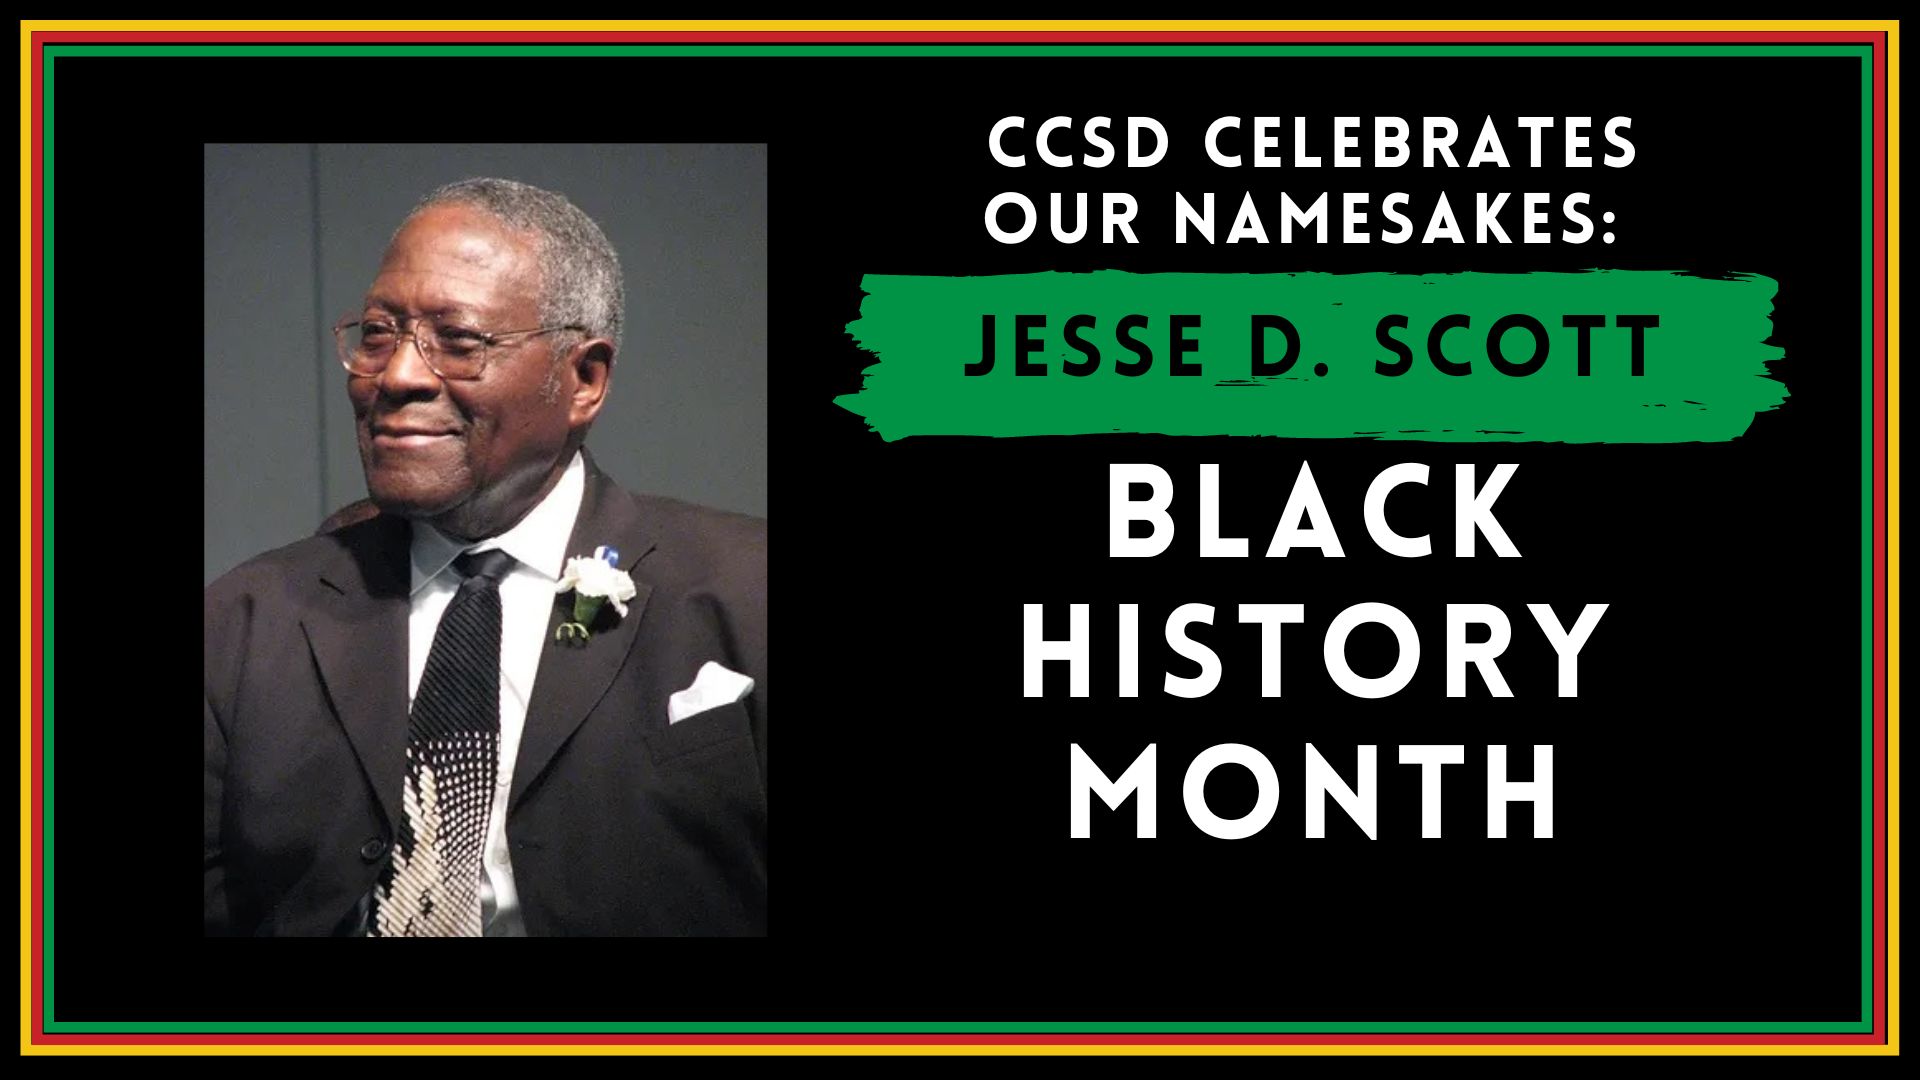 CCSD celebrates its namesakes: Jesse D. Scott